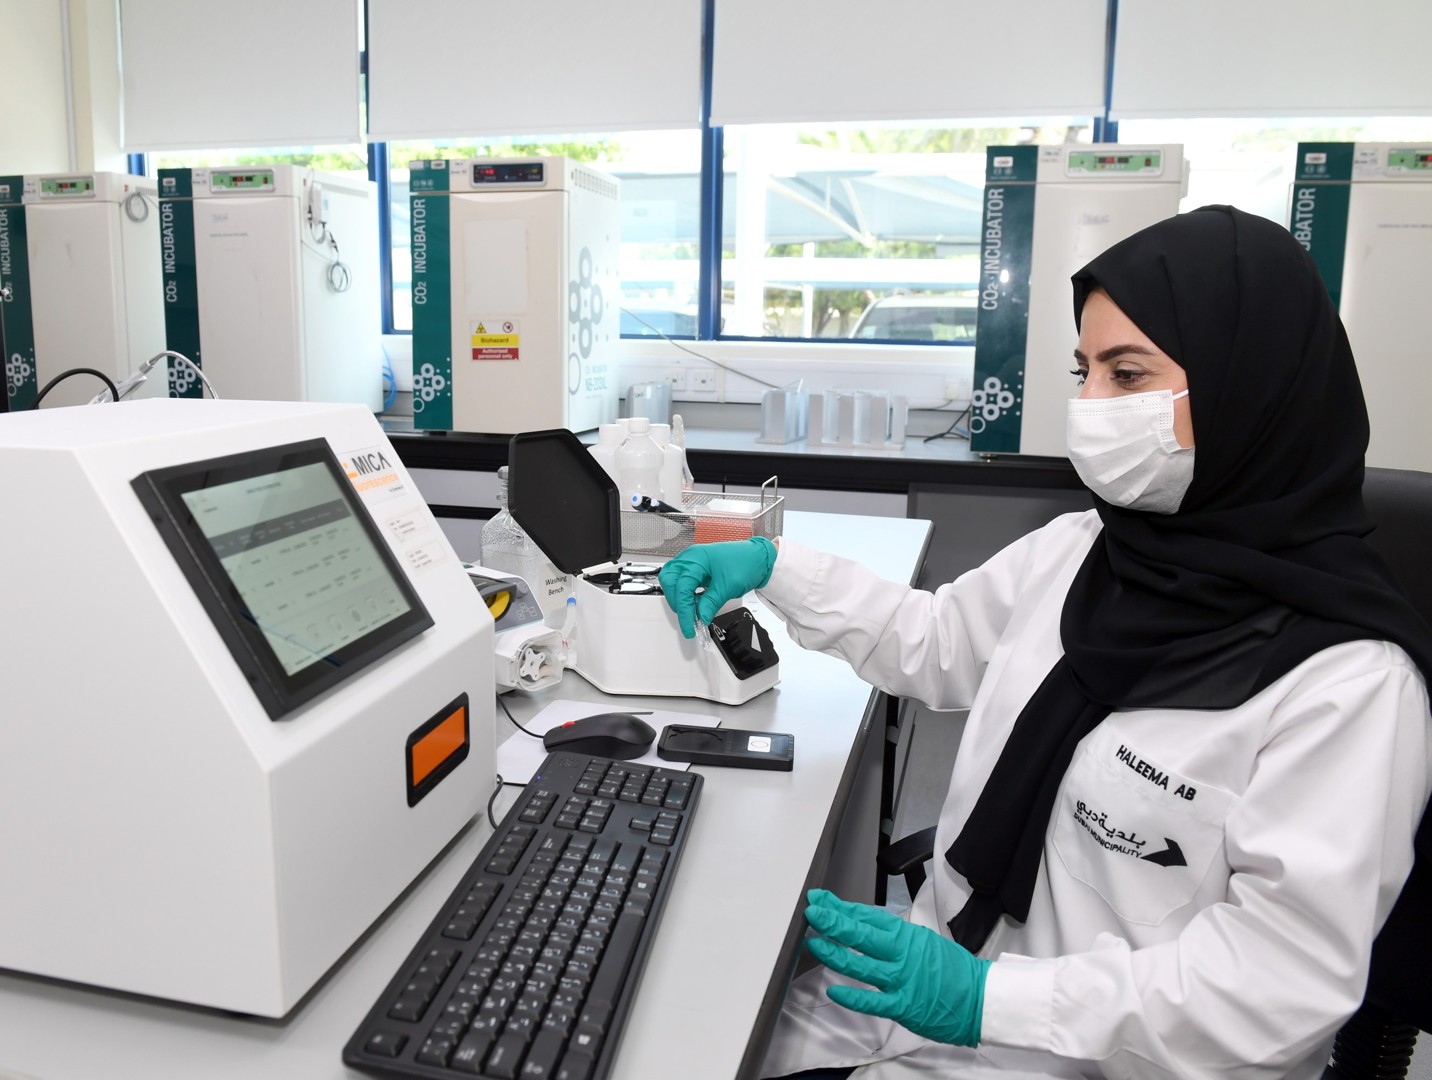 Photo: Dubai Central Laboratory implements AI-based technology to detect ‘Legionella’ bacteria